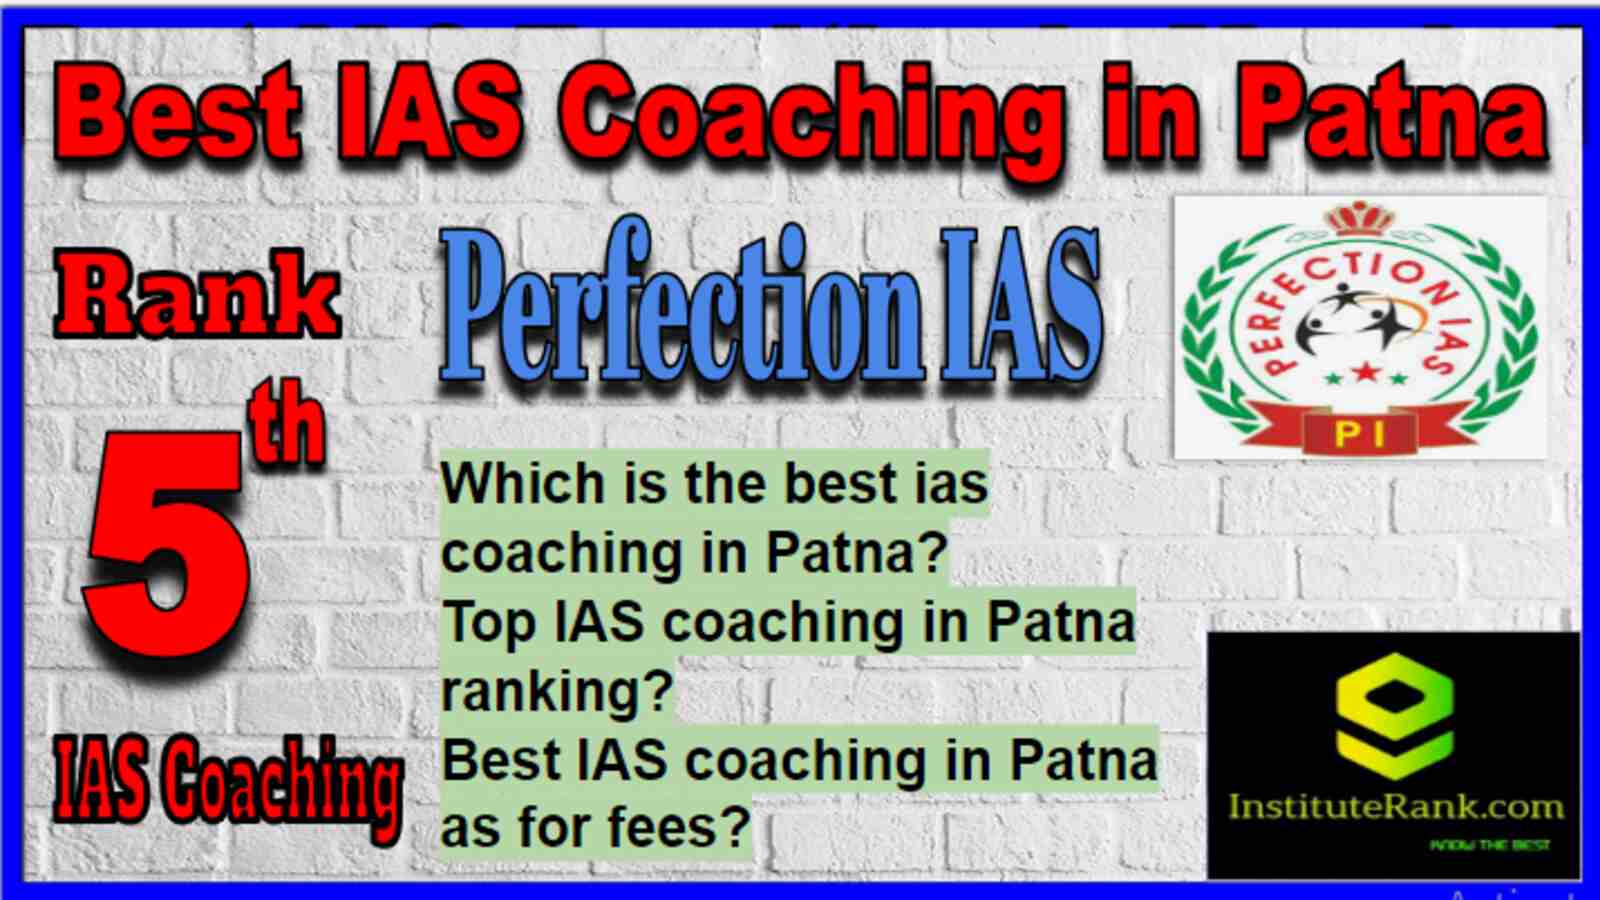 Rank 5 Best IAS Coaching in Patna